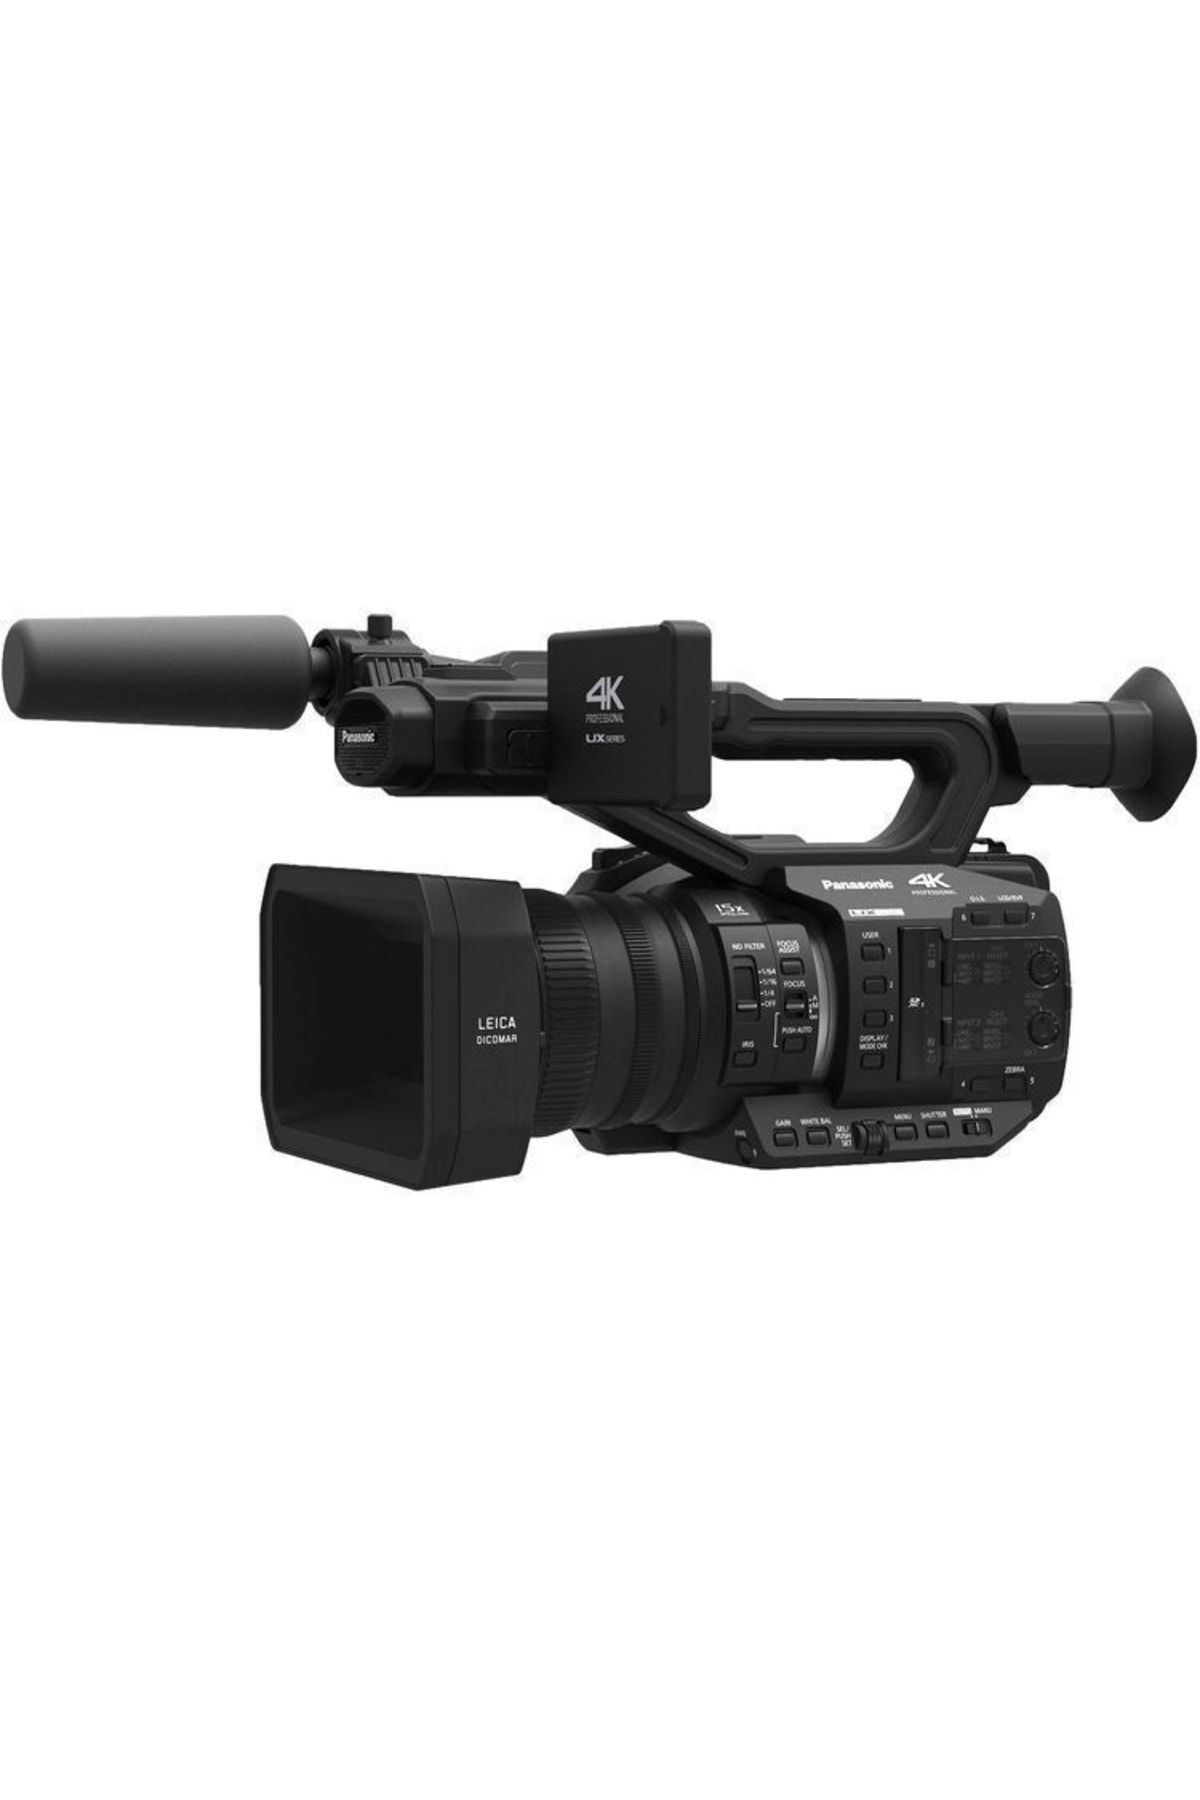 Panasonic Ag-ux90 4khd Professional Video Kamera